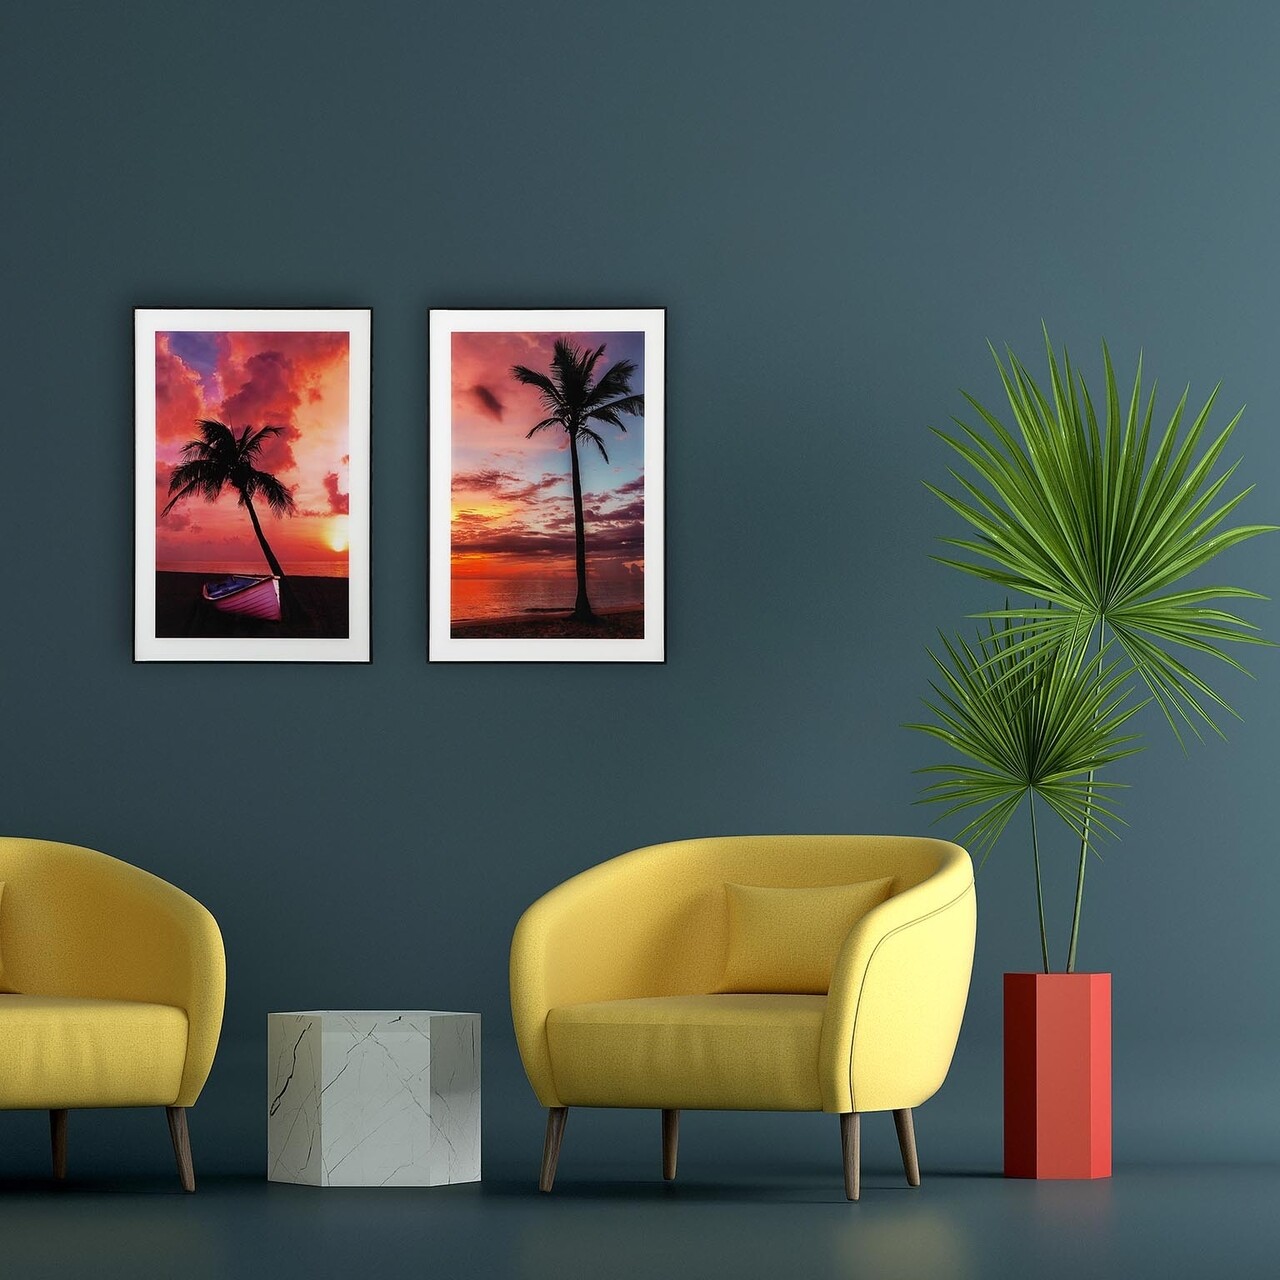 Tablou decorativ Palm Tree Sunset, Versa, 40 x 60 cm, sticla/MDF